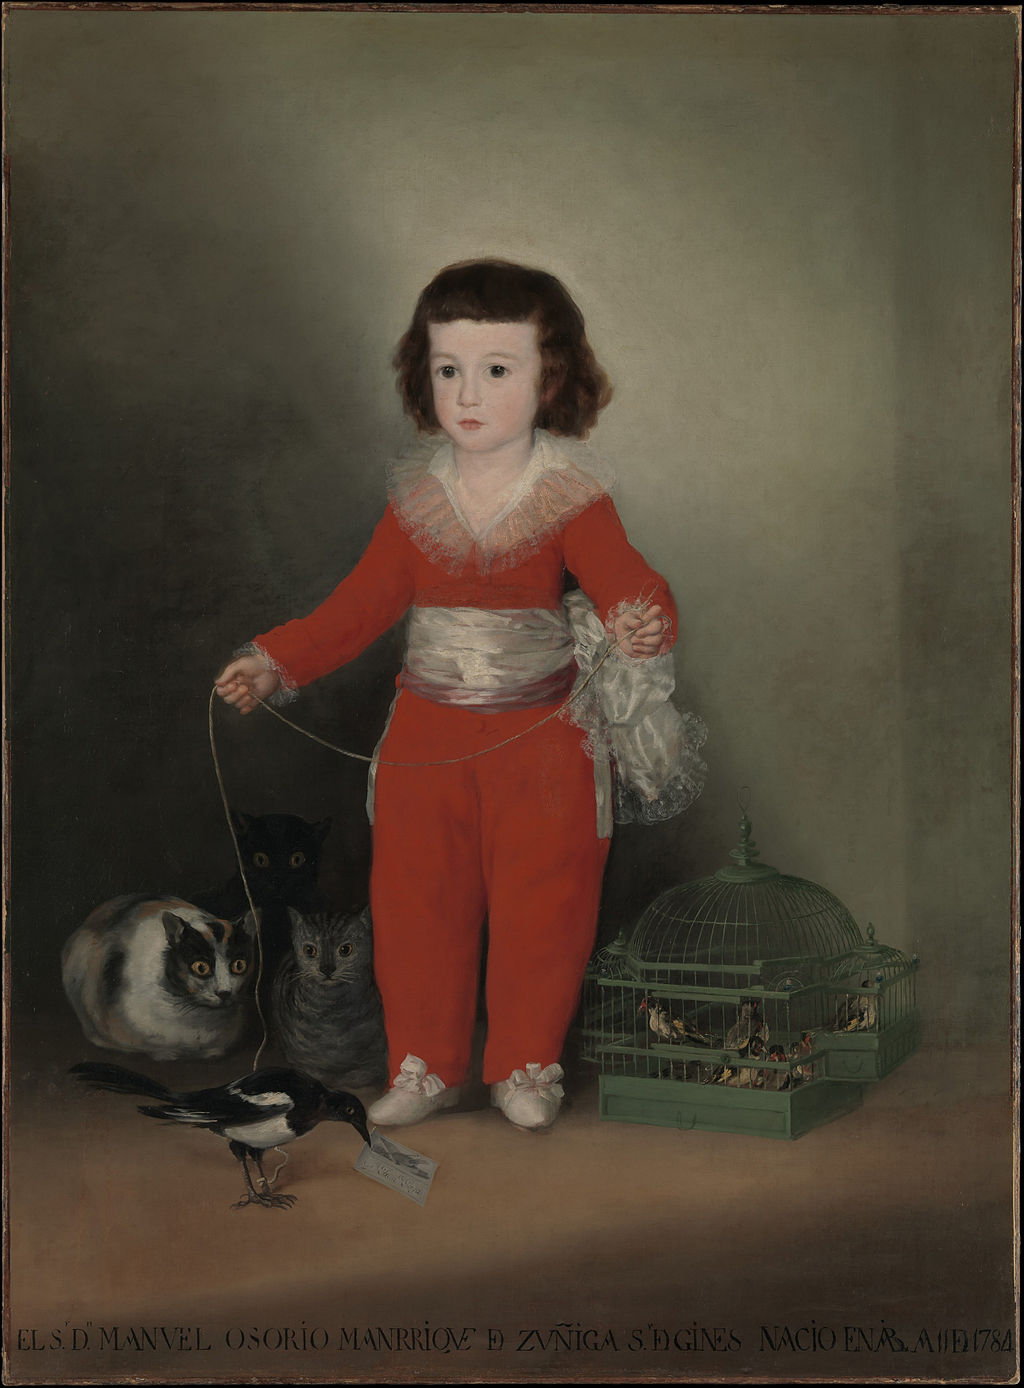 Goya, 1784. A skeleton suit or similar outfit.